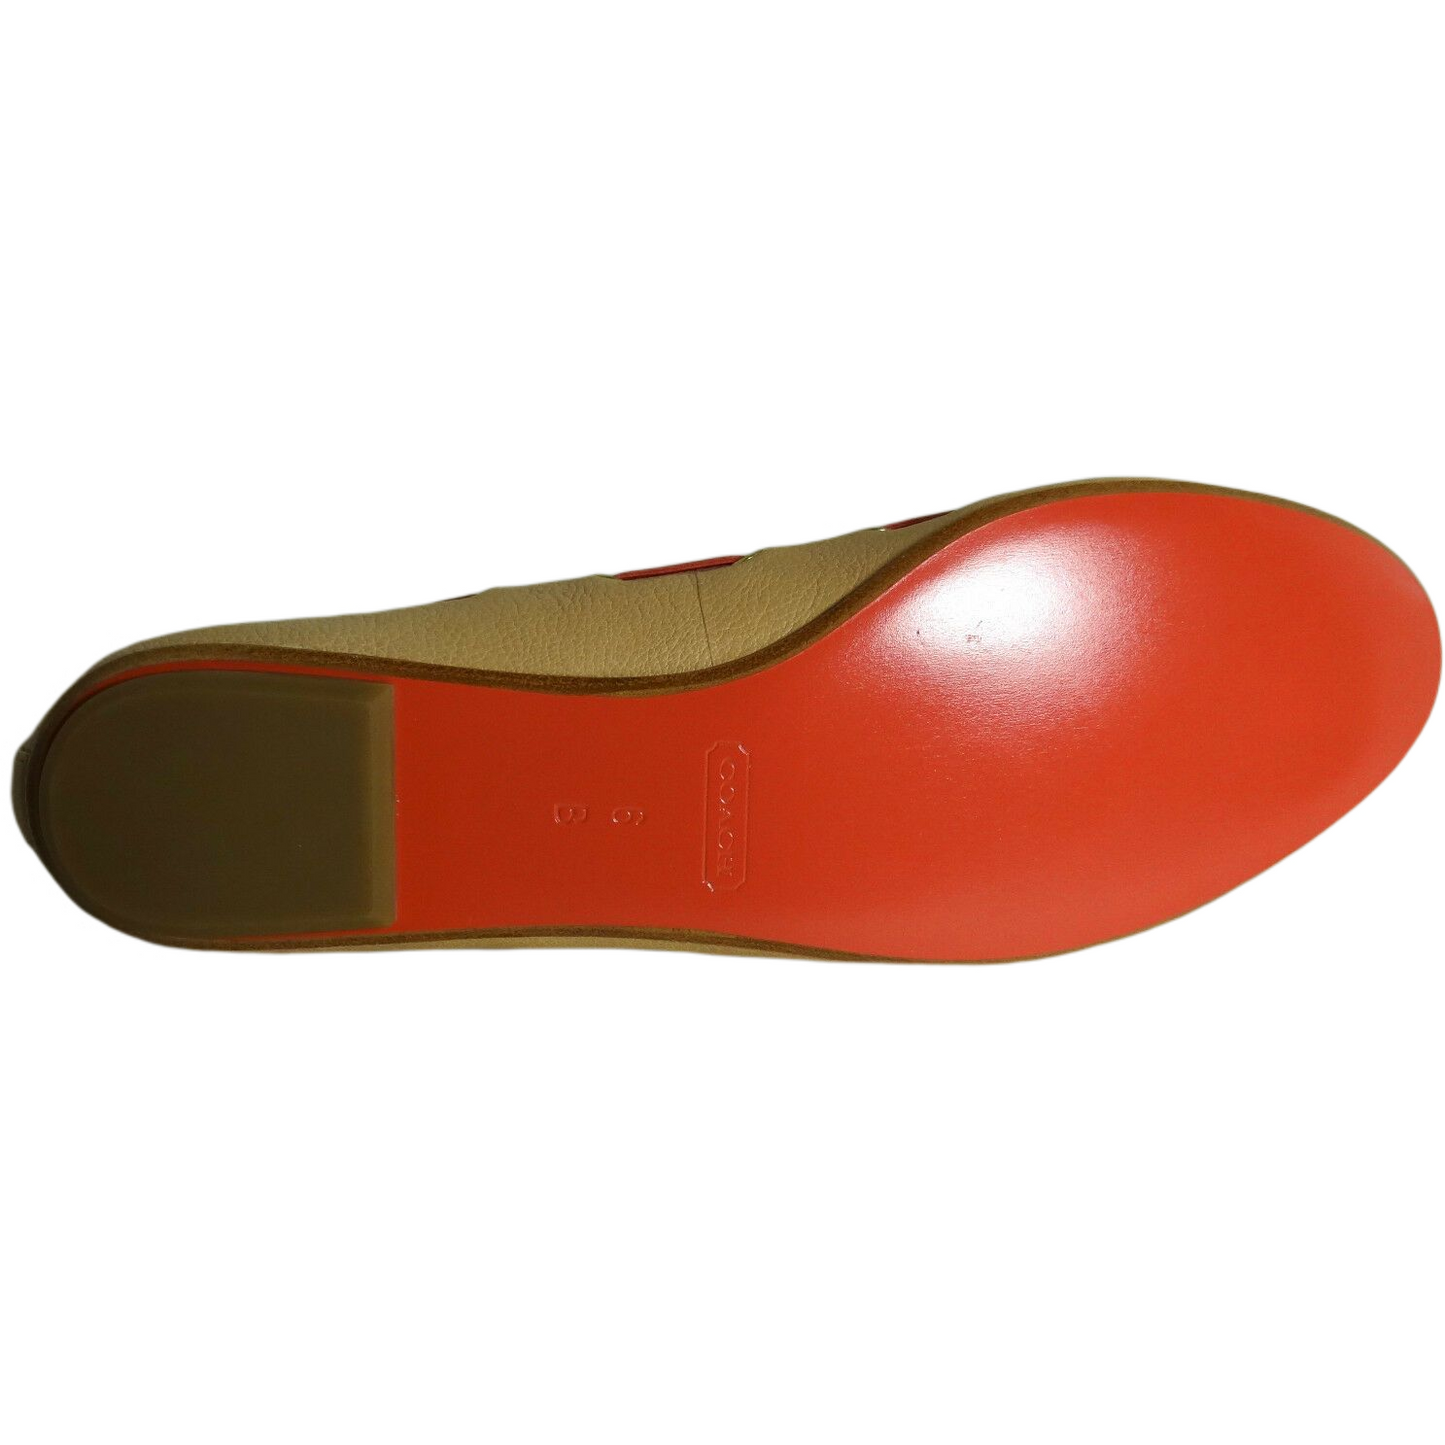 COACH Manika Soft Tan Leather Flat Shoes manika-soft-tan-leather-flat-shoes 29095784528166-73f867a3-559.png